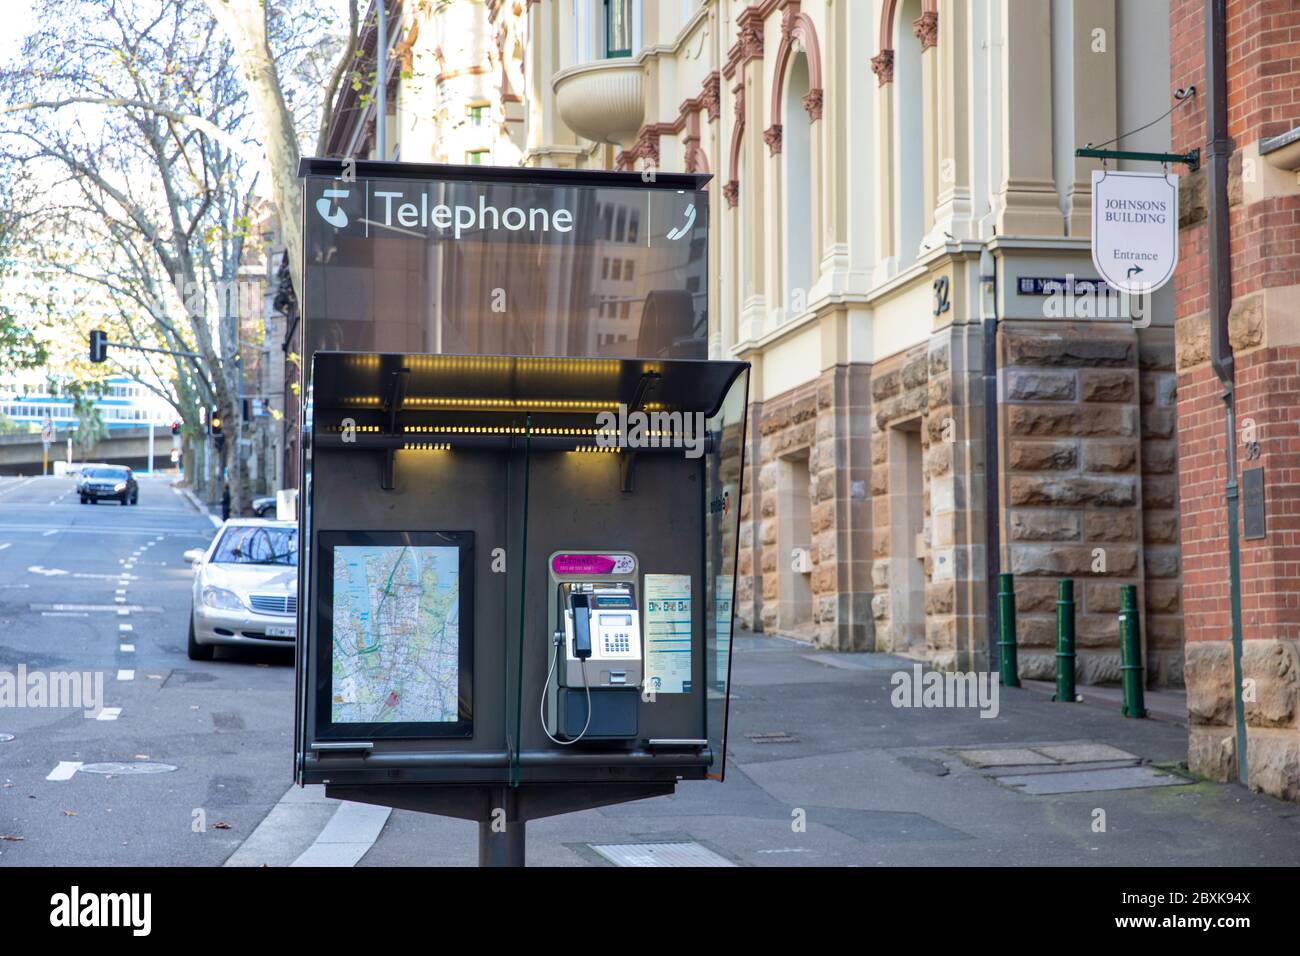 Telstra public telephone booth in Sydney city centre,NSW,Australia Stock Photo